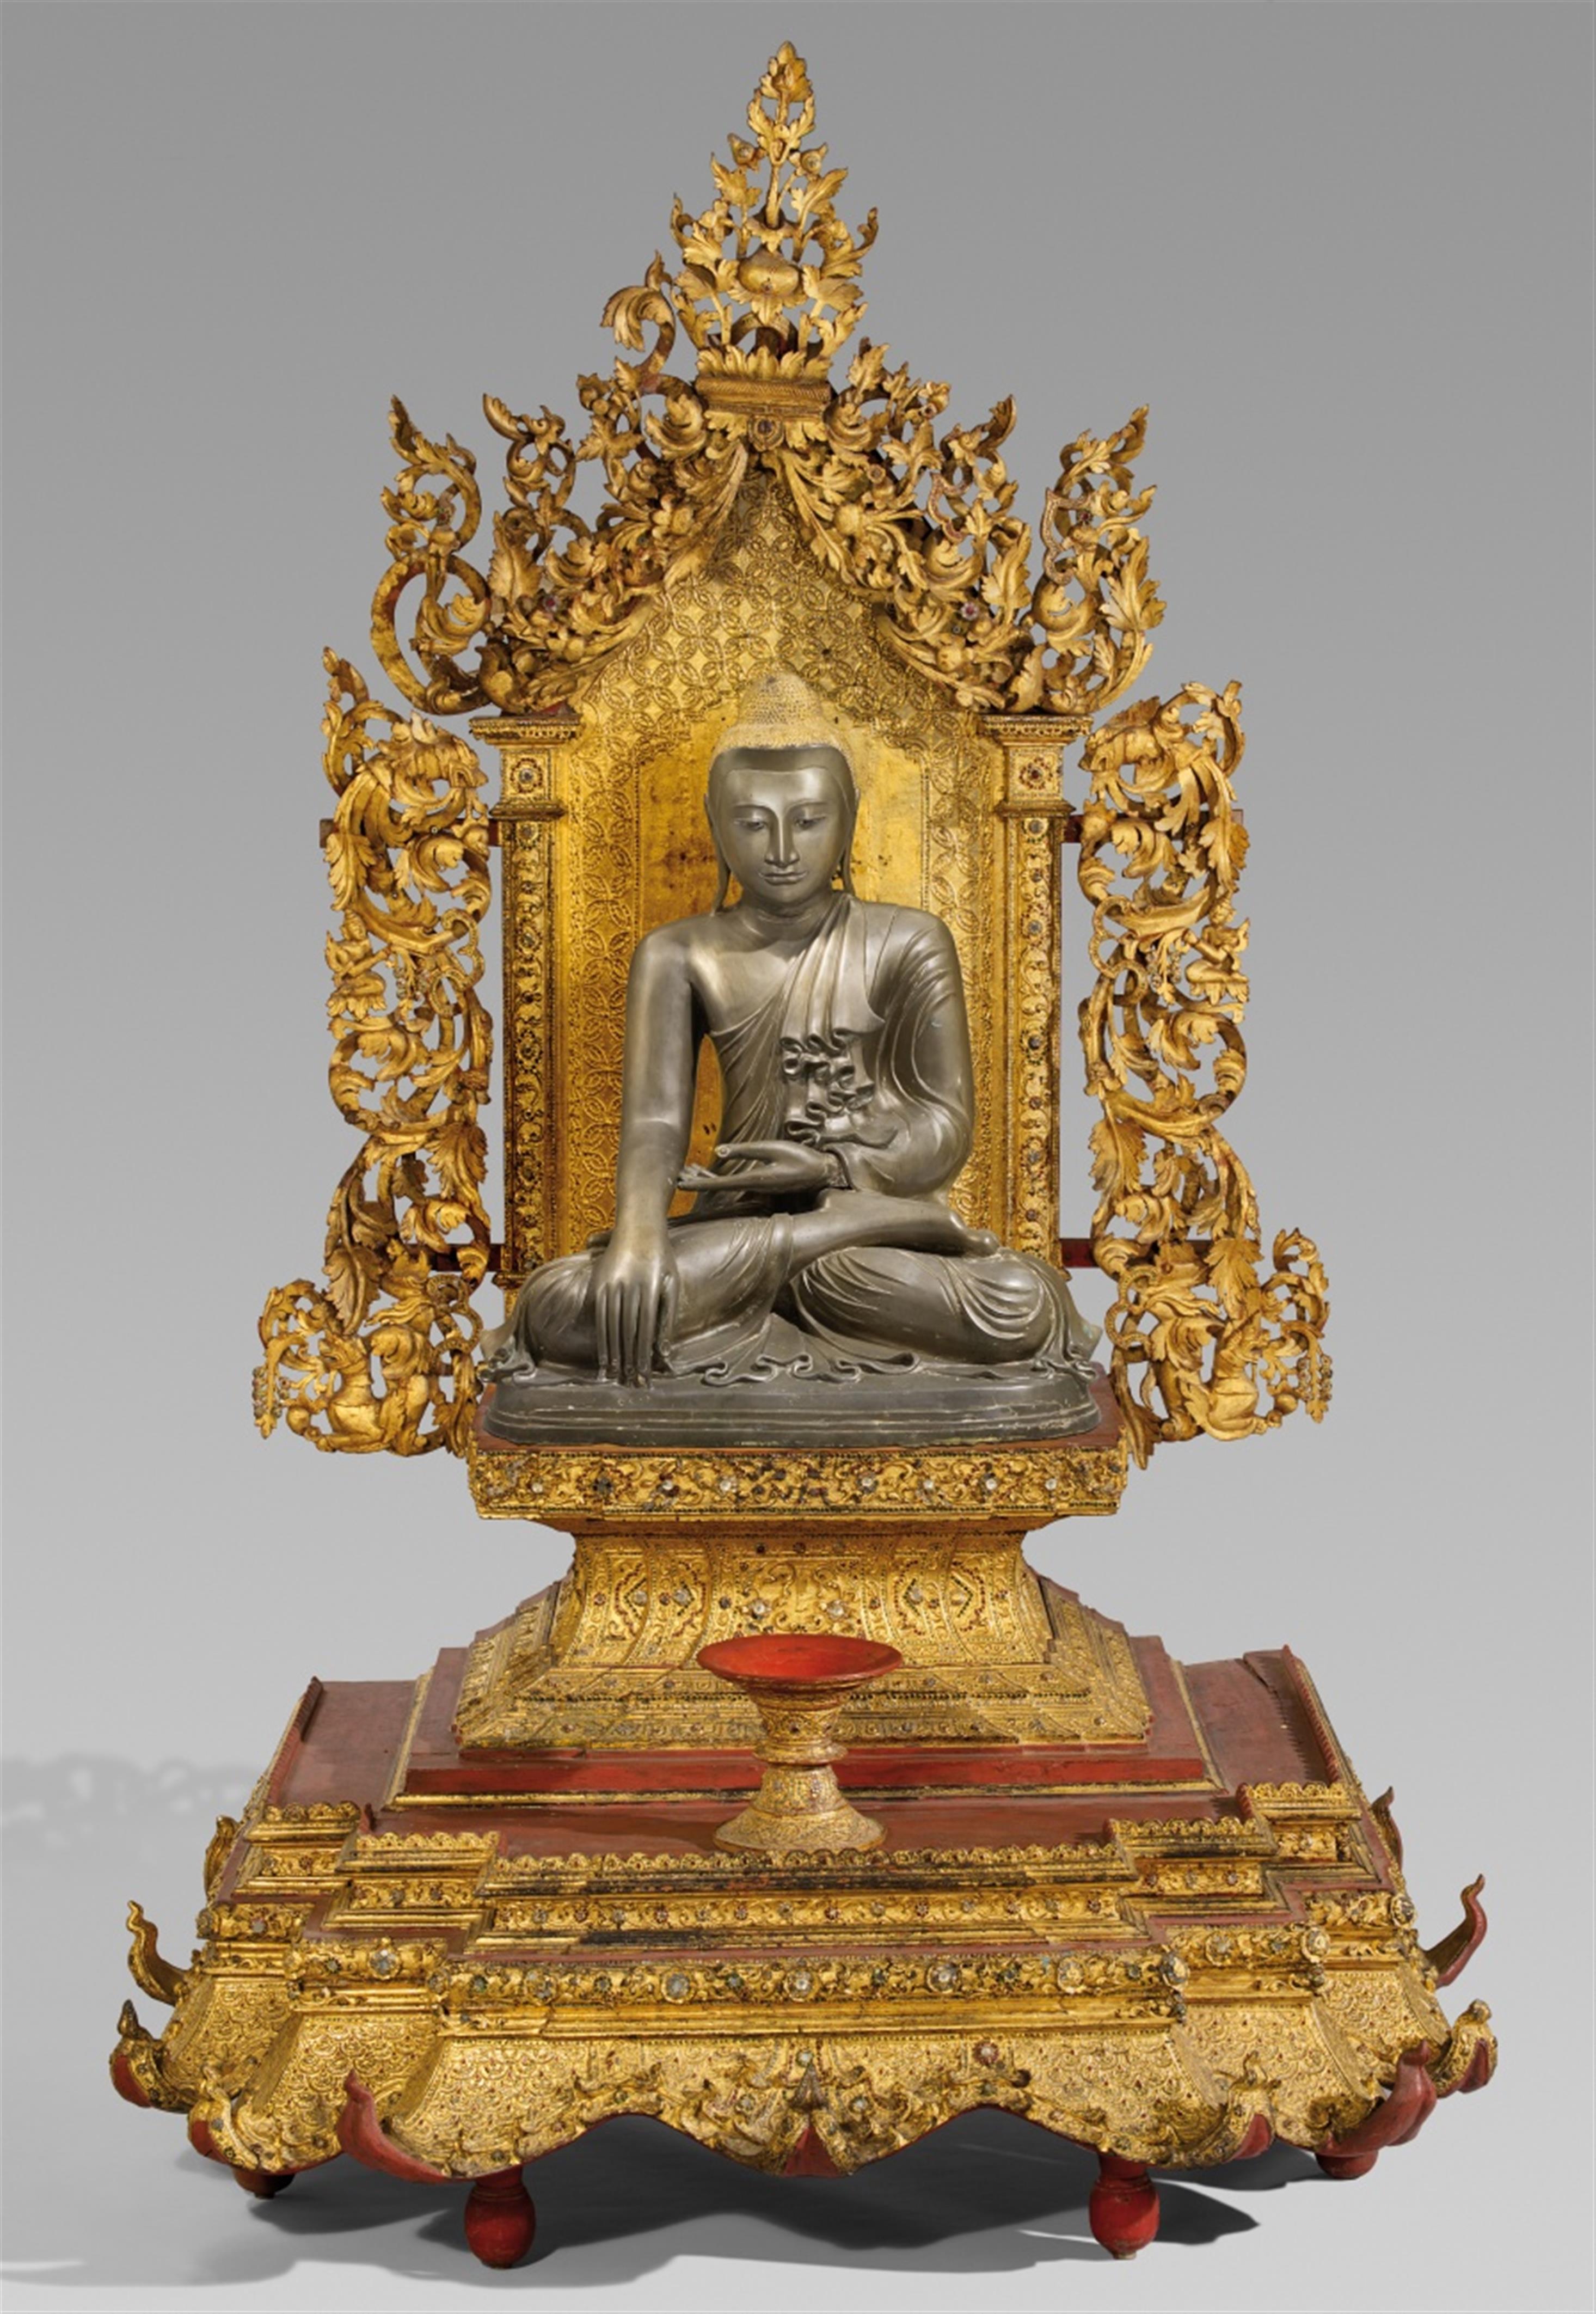 Monumentaler Altarthron (hpaya khan) mit Bronzefigur des Buddha Shakyamuni. Holz, Lack, Gold, Glas, Bronze. Birma, Mandalay. Spätes 19./frühes 20. Jh. - image-1